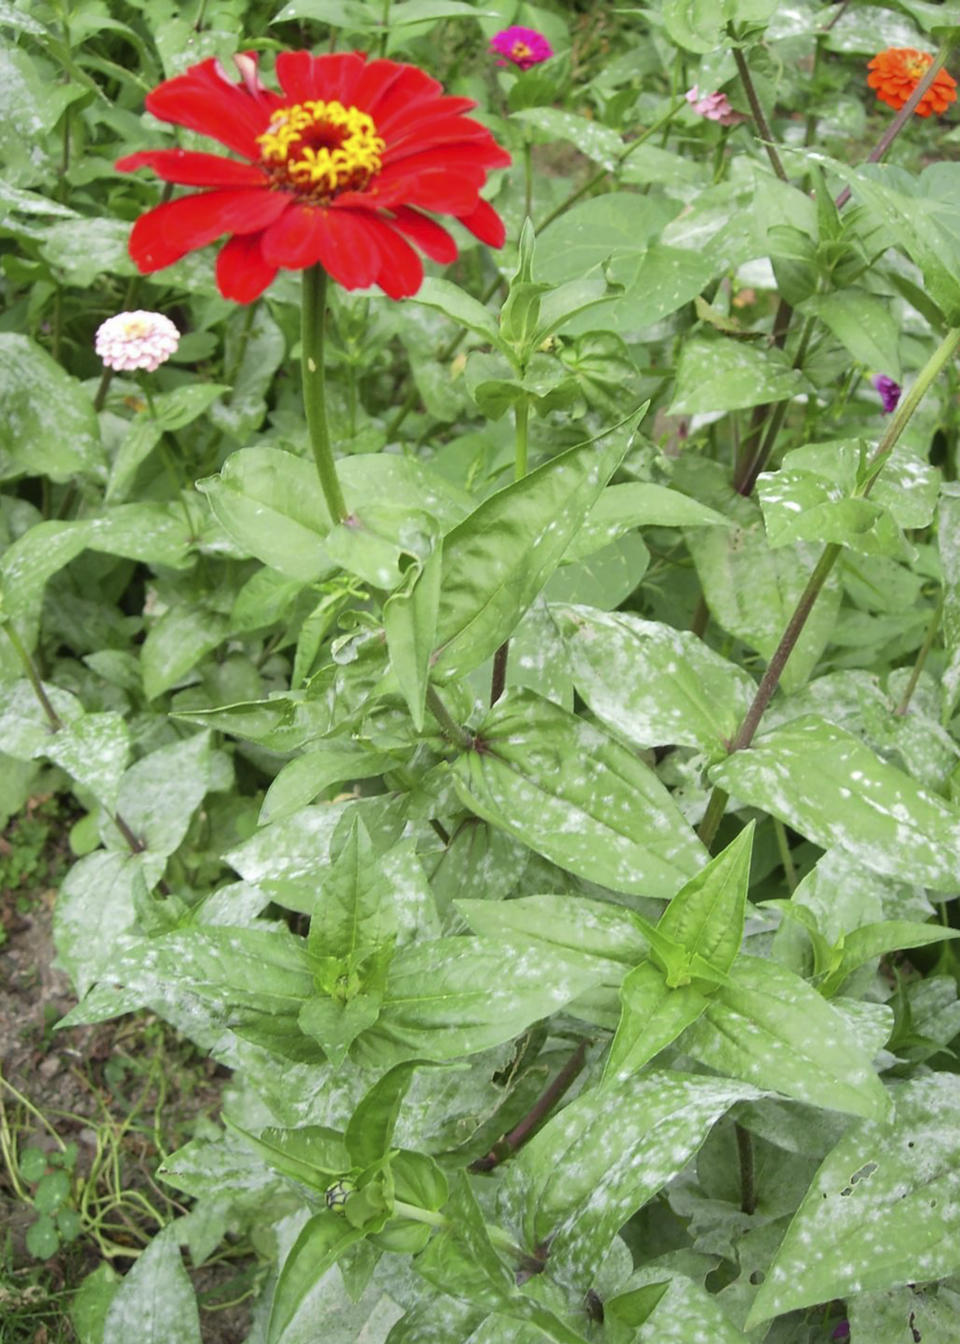 This image provided by Bugwood.org shows powdery mildew symptoms on a zinnia plant. (Elizabeth Bush/Virginia Polytechnic Institute and State University/Bugwood.org via AP)